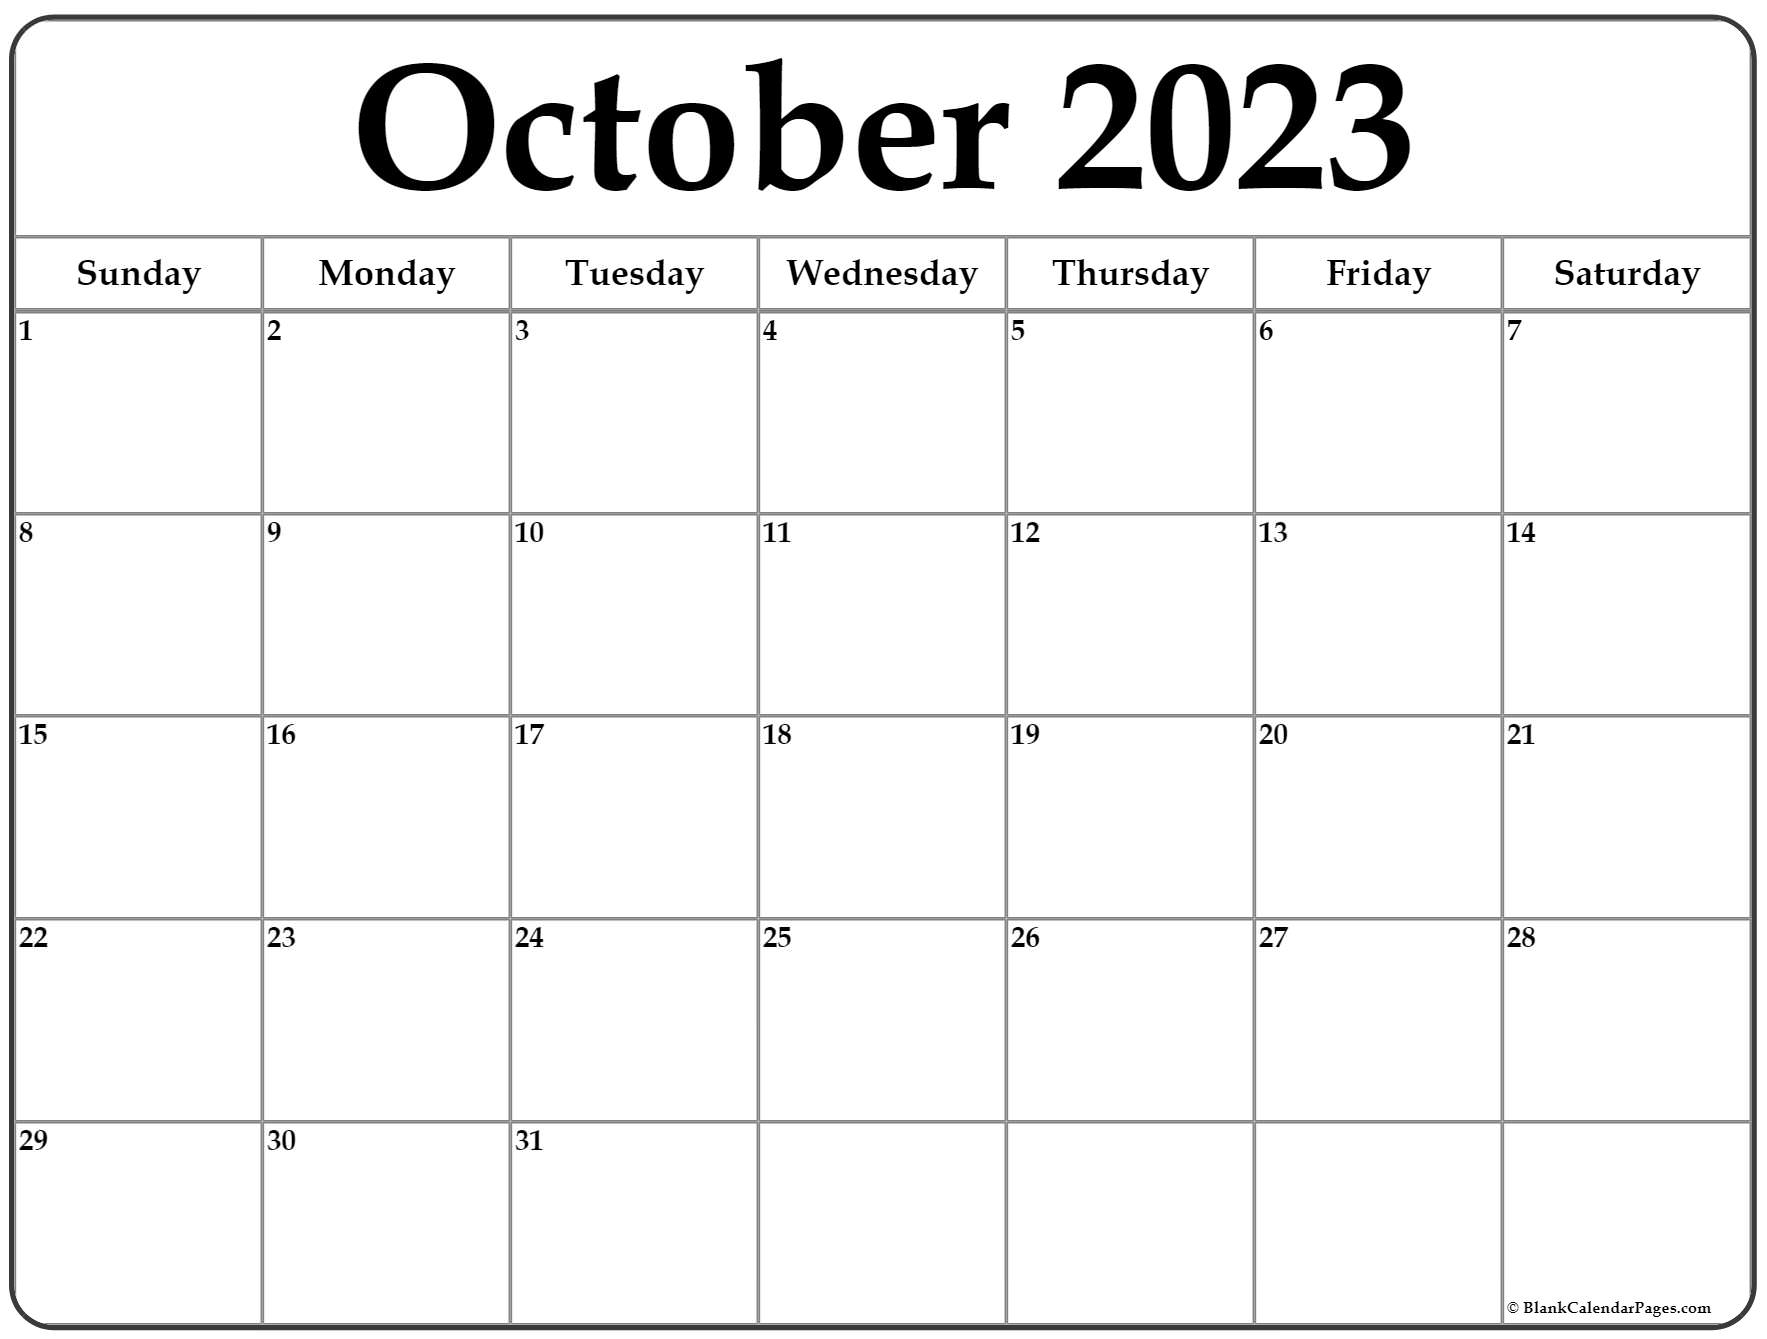 free-printable-calendar-october-2023-printable-world-holiday